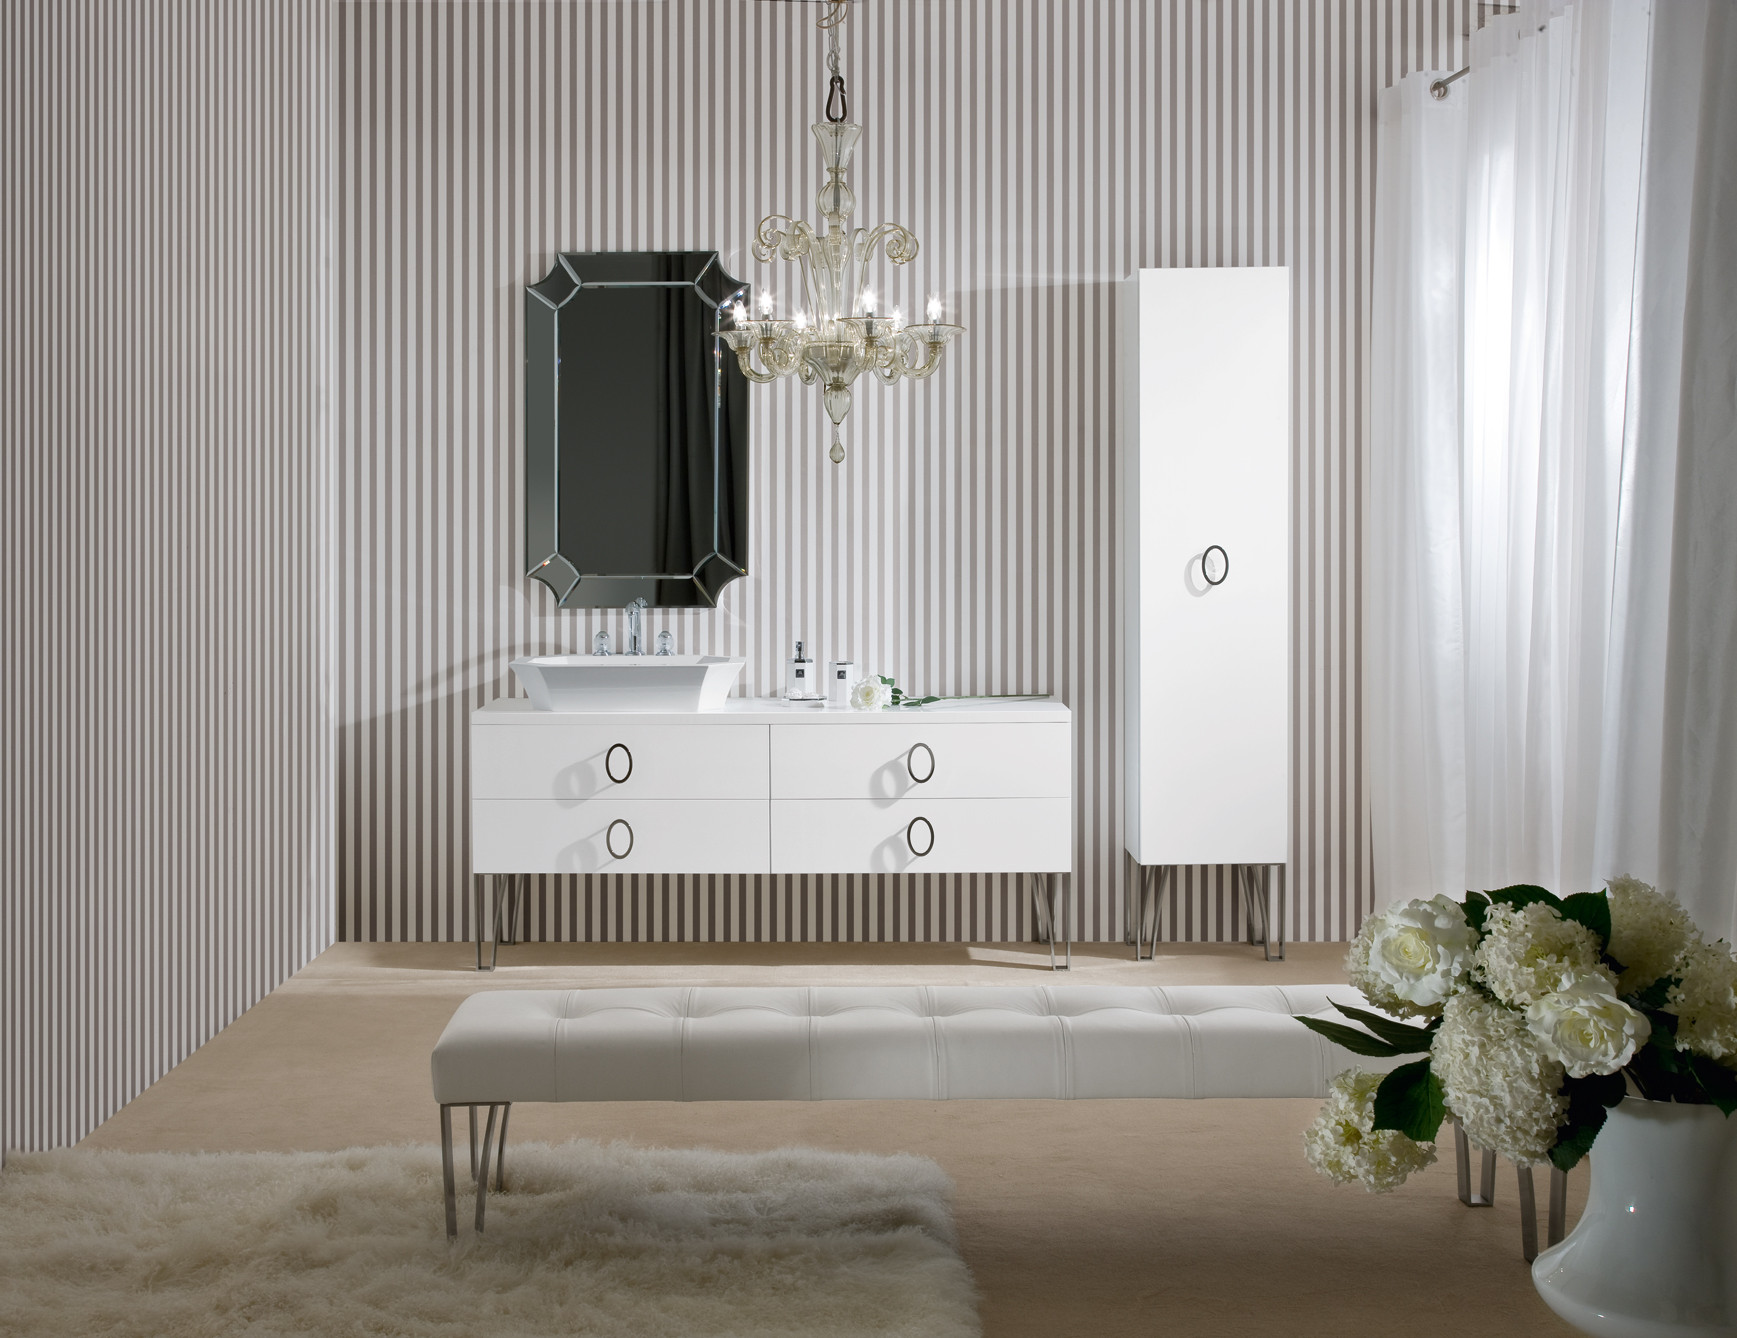 High End Bathroom Vanities
 Daphne D15 High End Bathroom Vanity in White Lacquer Wood